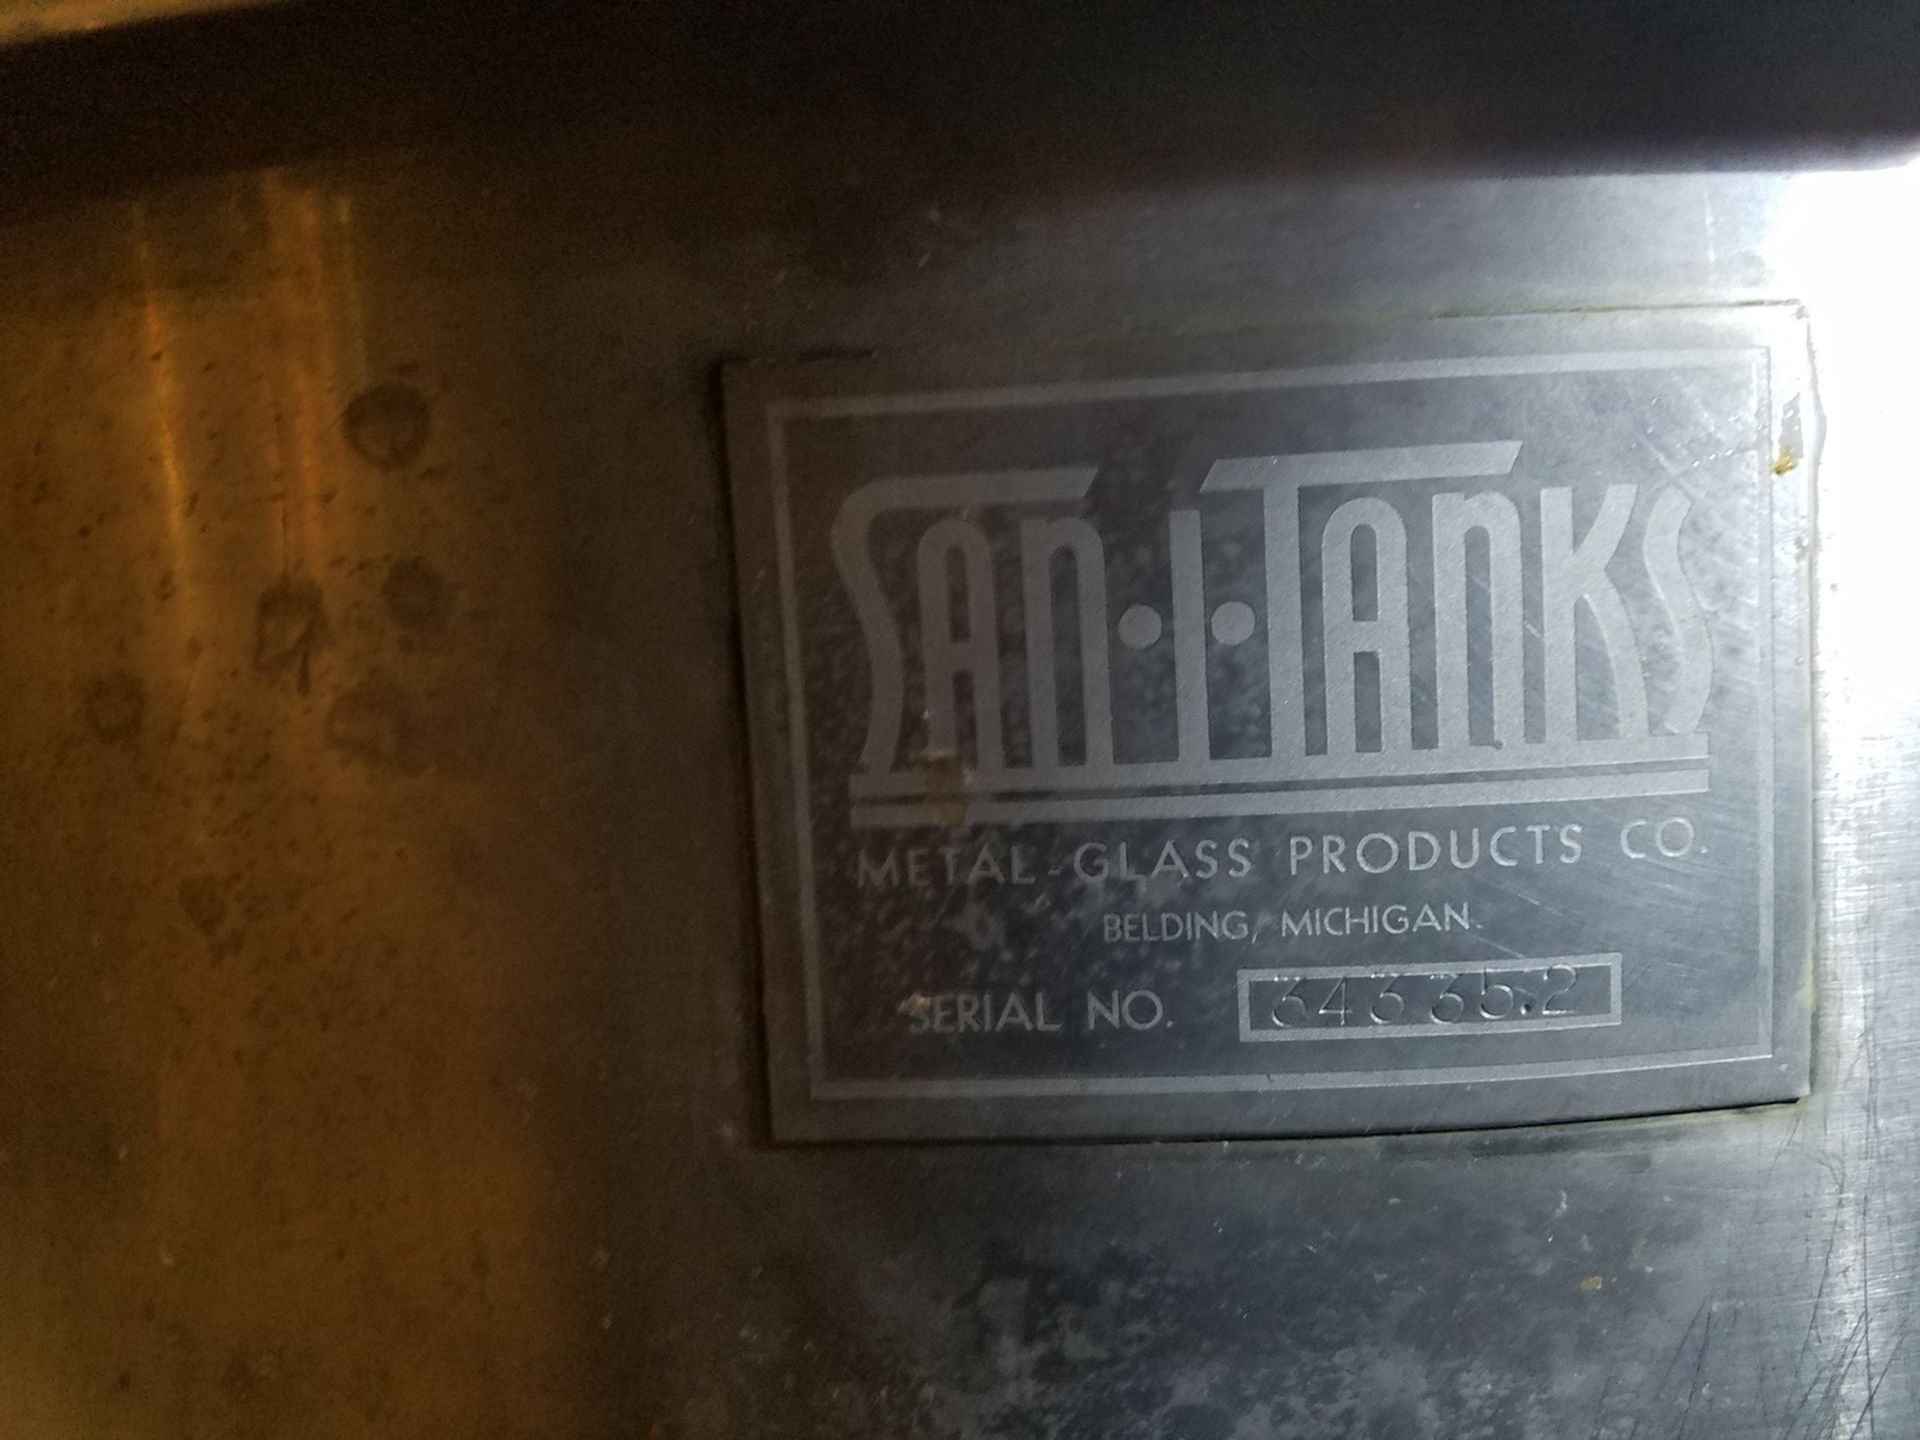 San-I-Tanks, Stainless Mix Tank, 100 Gallon Cap. | Rigging: $85 - Image 5 of 6